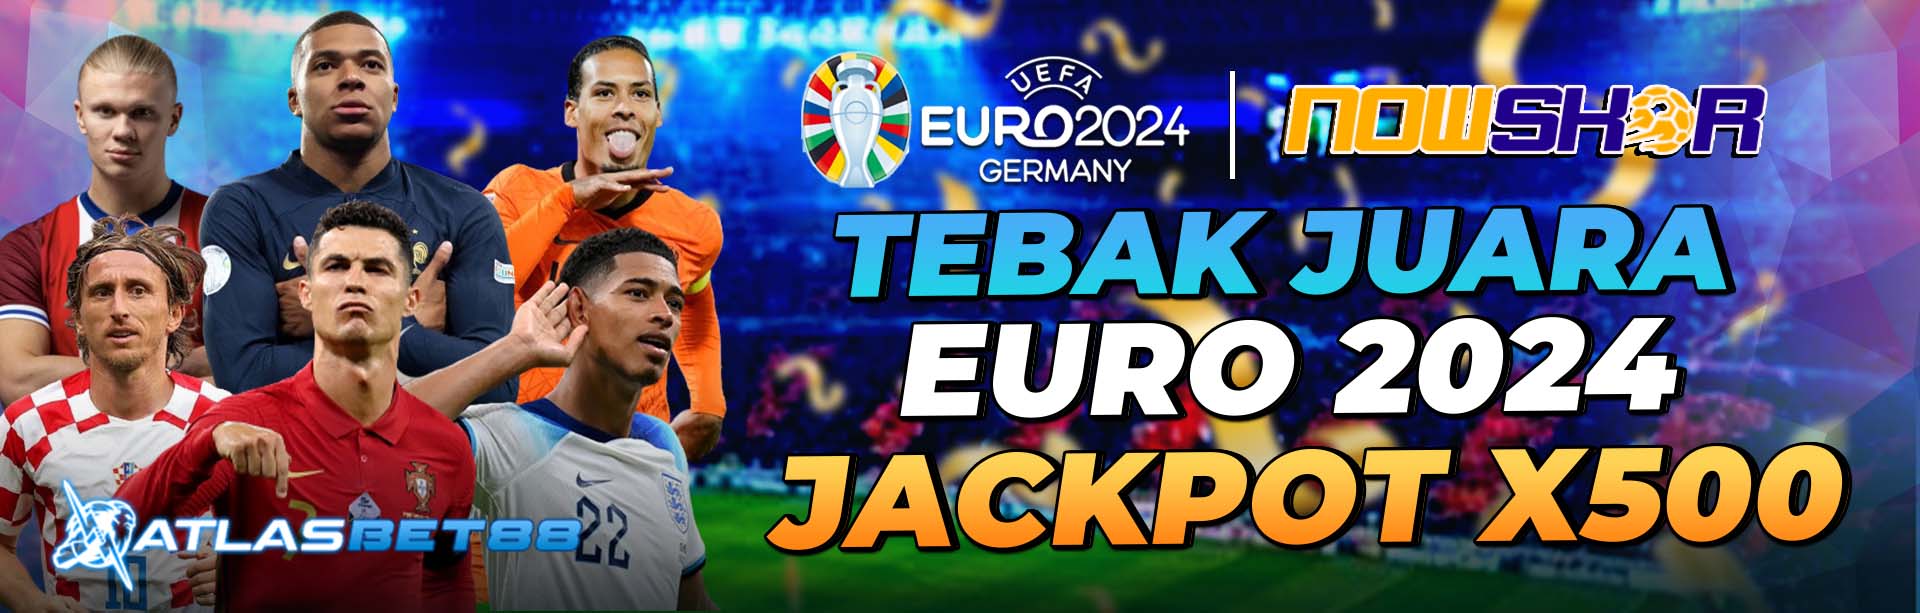 EVENT TEBAK JUARA EURO 2024 JACKPOT x500